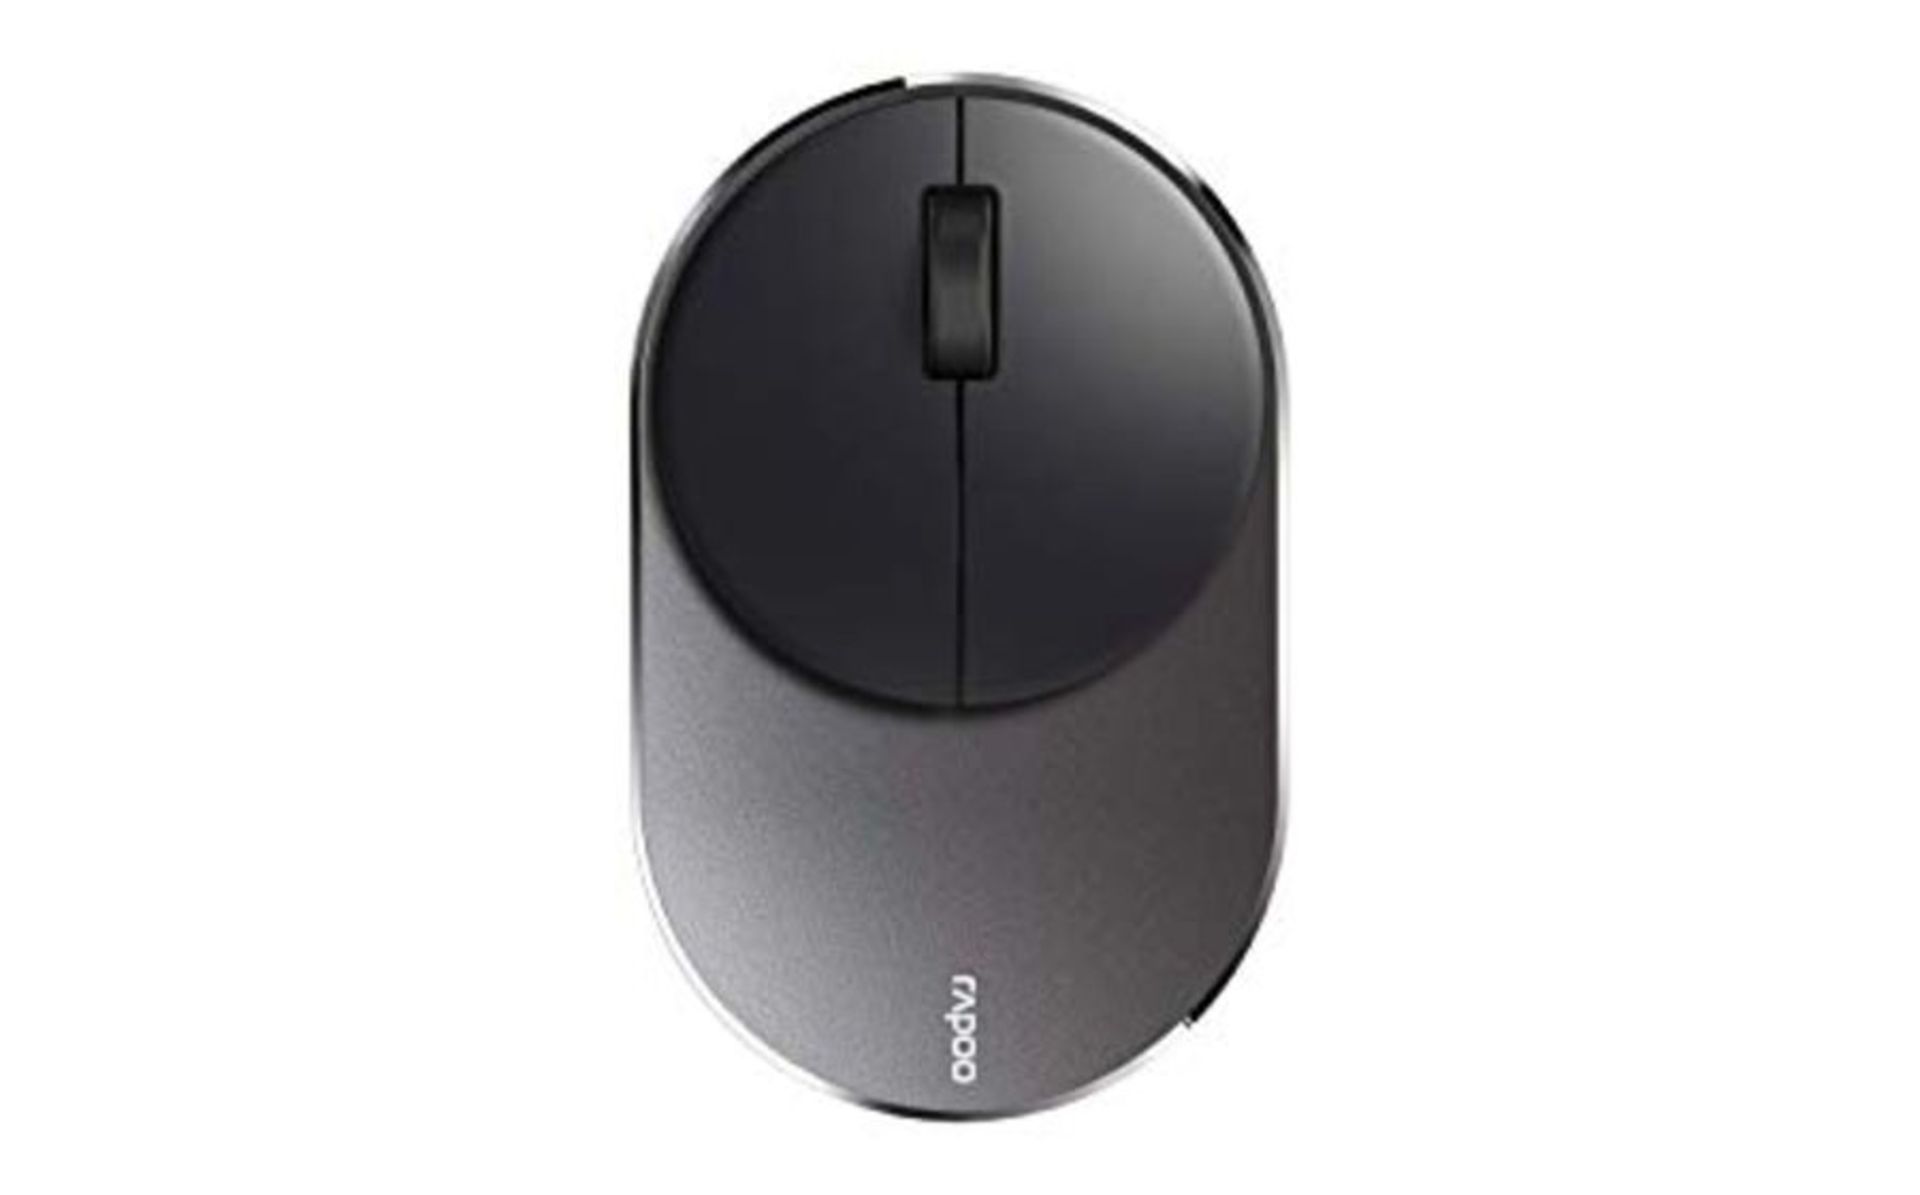 Rapoo M600 Mini Silent Wireless Mouse, Bluetooth and Wireless (2.4 GHz) via USB, Multi